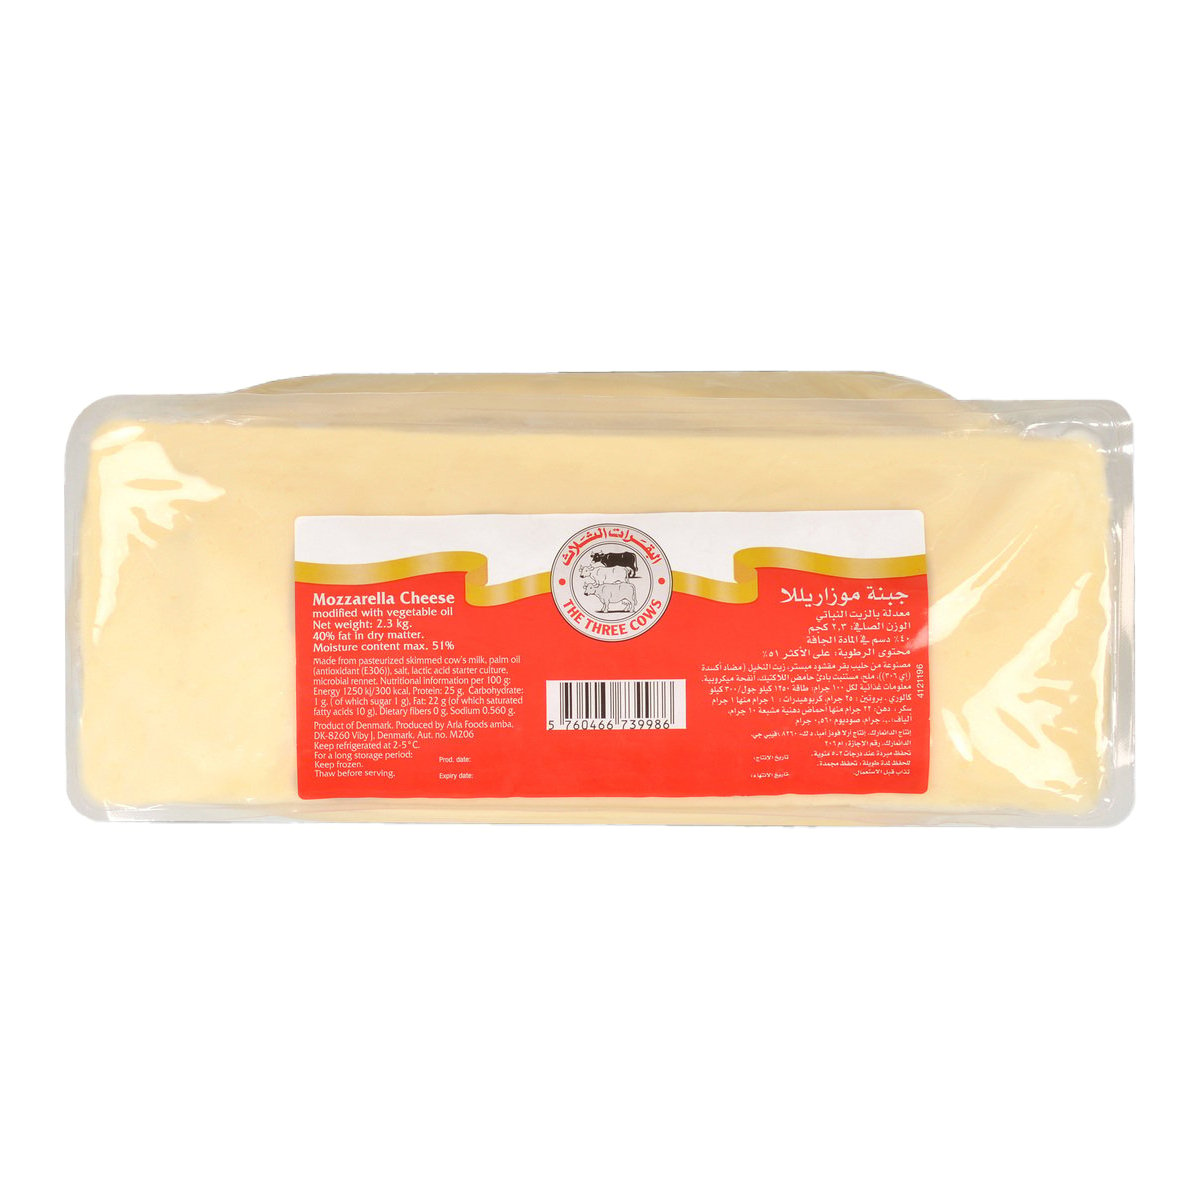 The Three Cows Mozzarella Cheese Block 2.3 kg